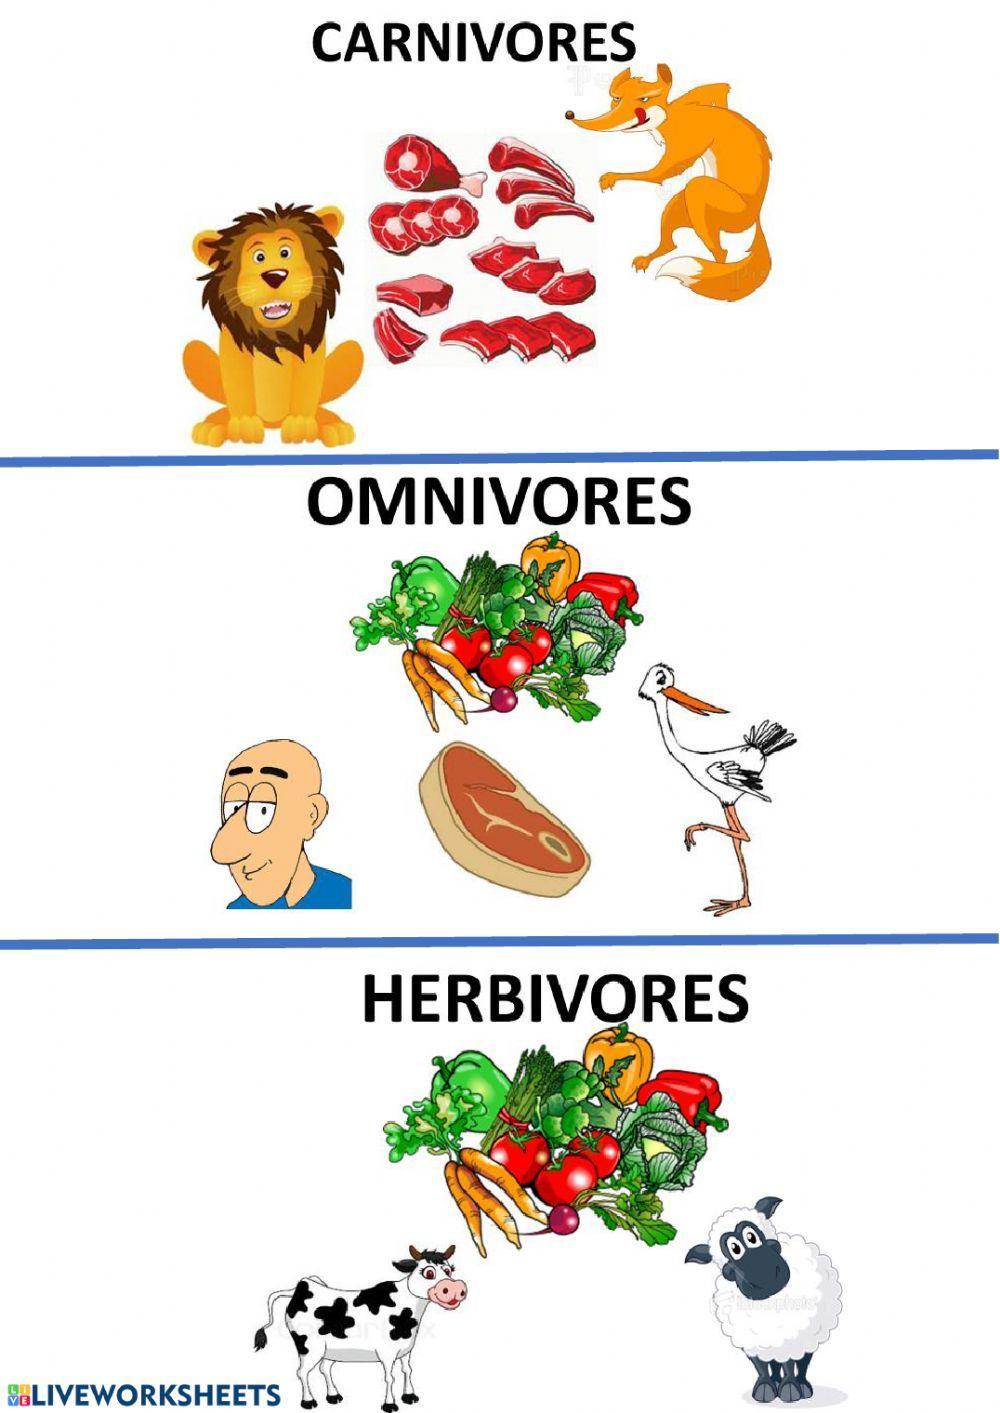 Omnivores, carnivores, herbivores